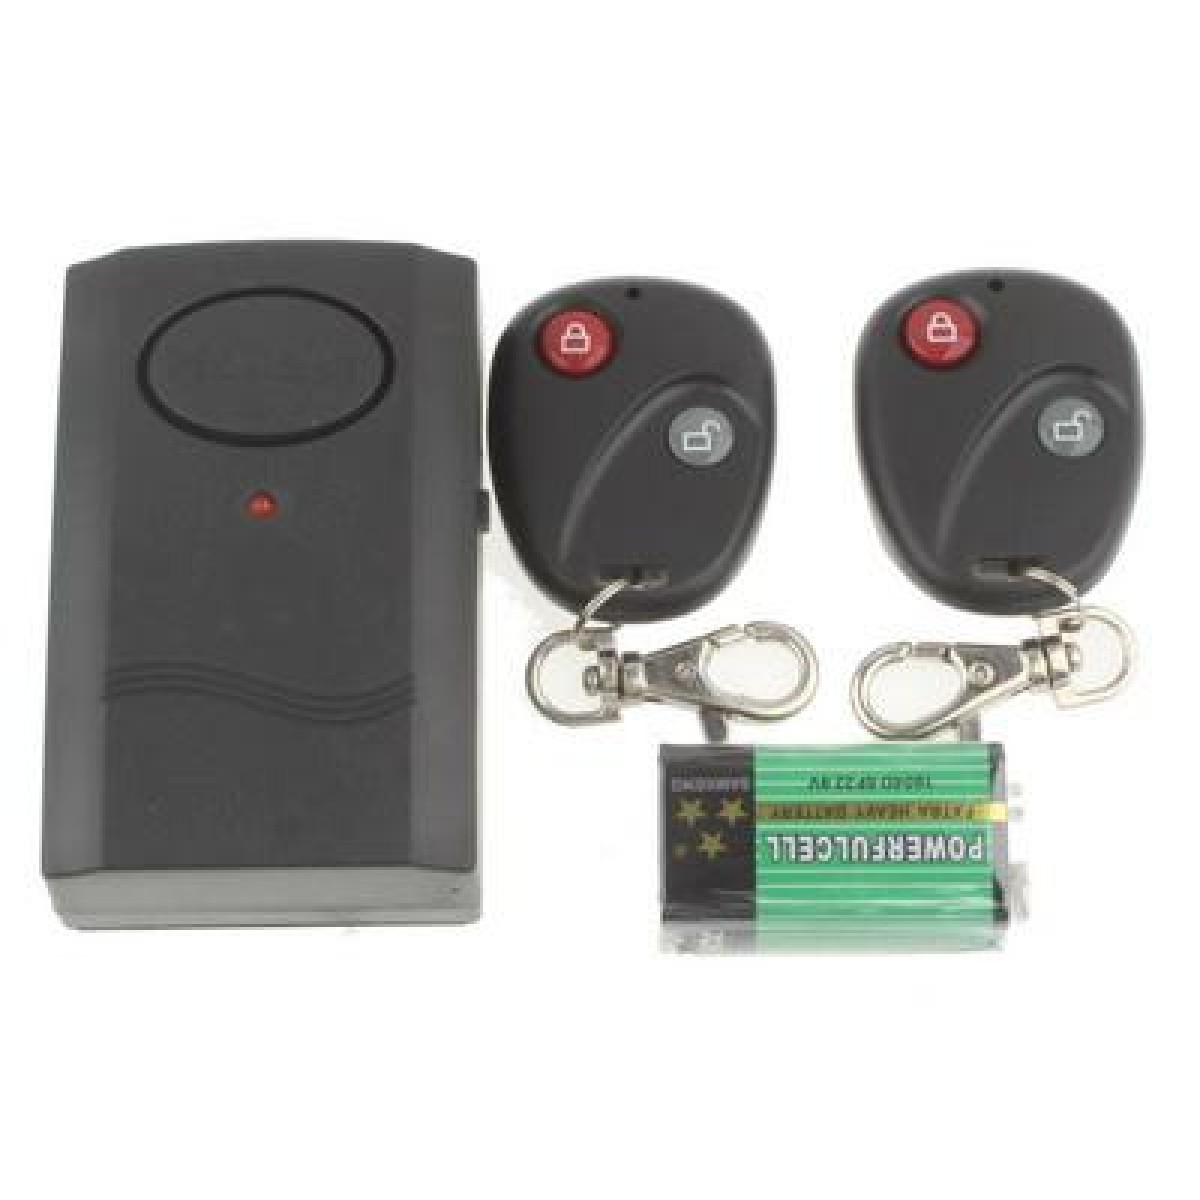 Wireless Remote Control Vibration Alarm, 2x Remote Control, Free GF22 Battery